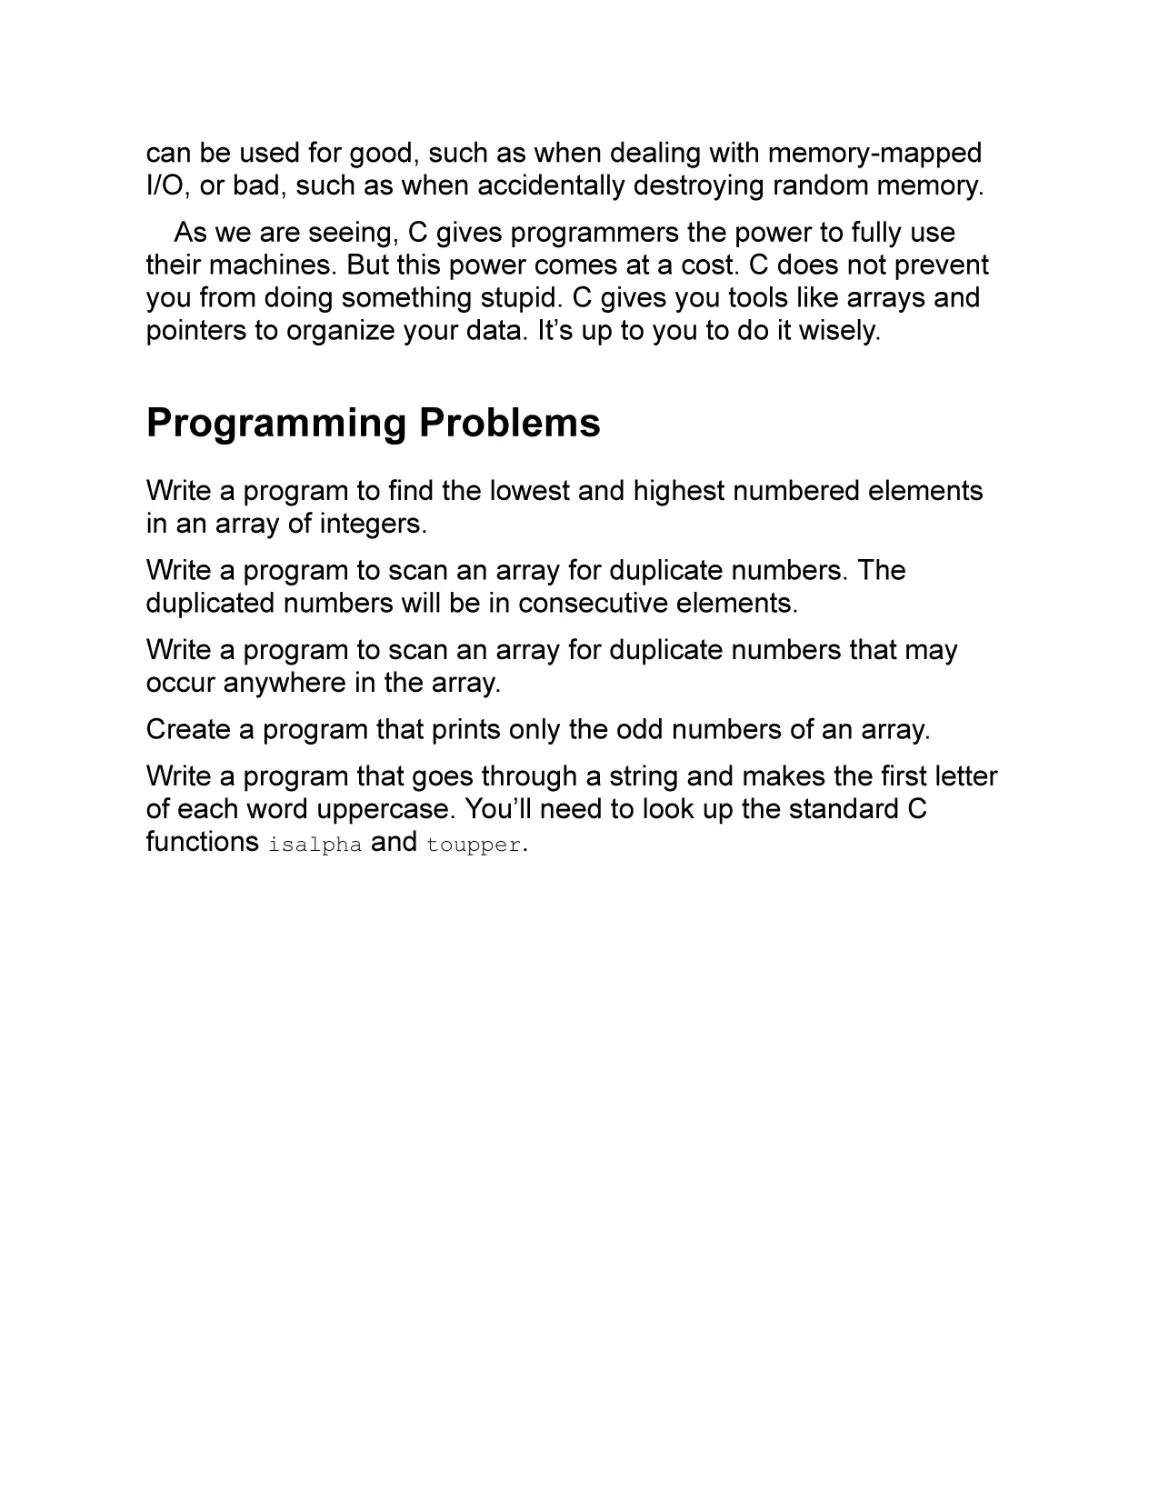 Programming Problems